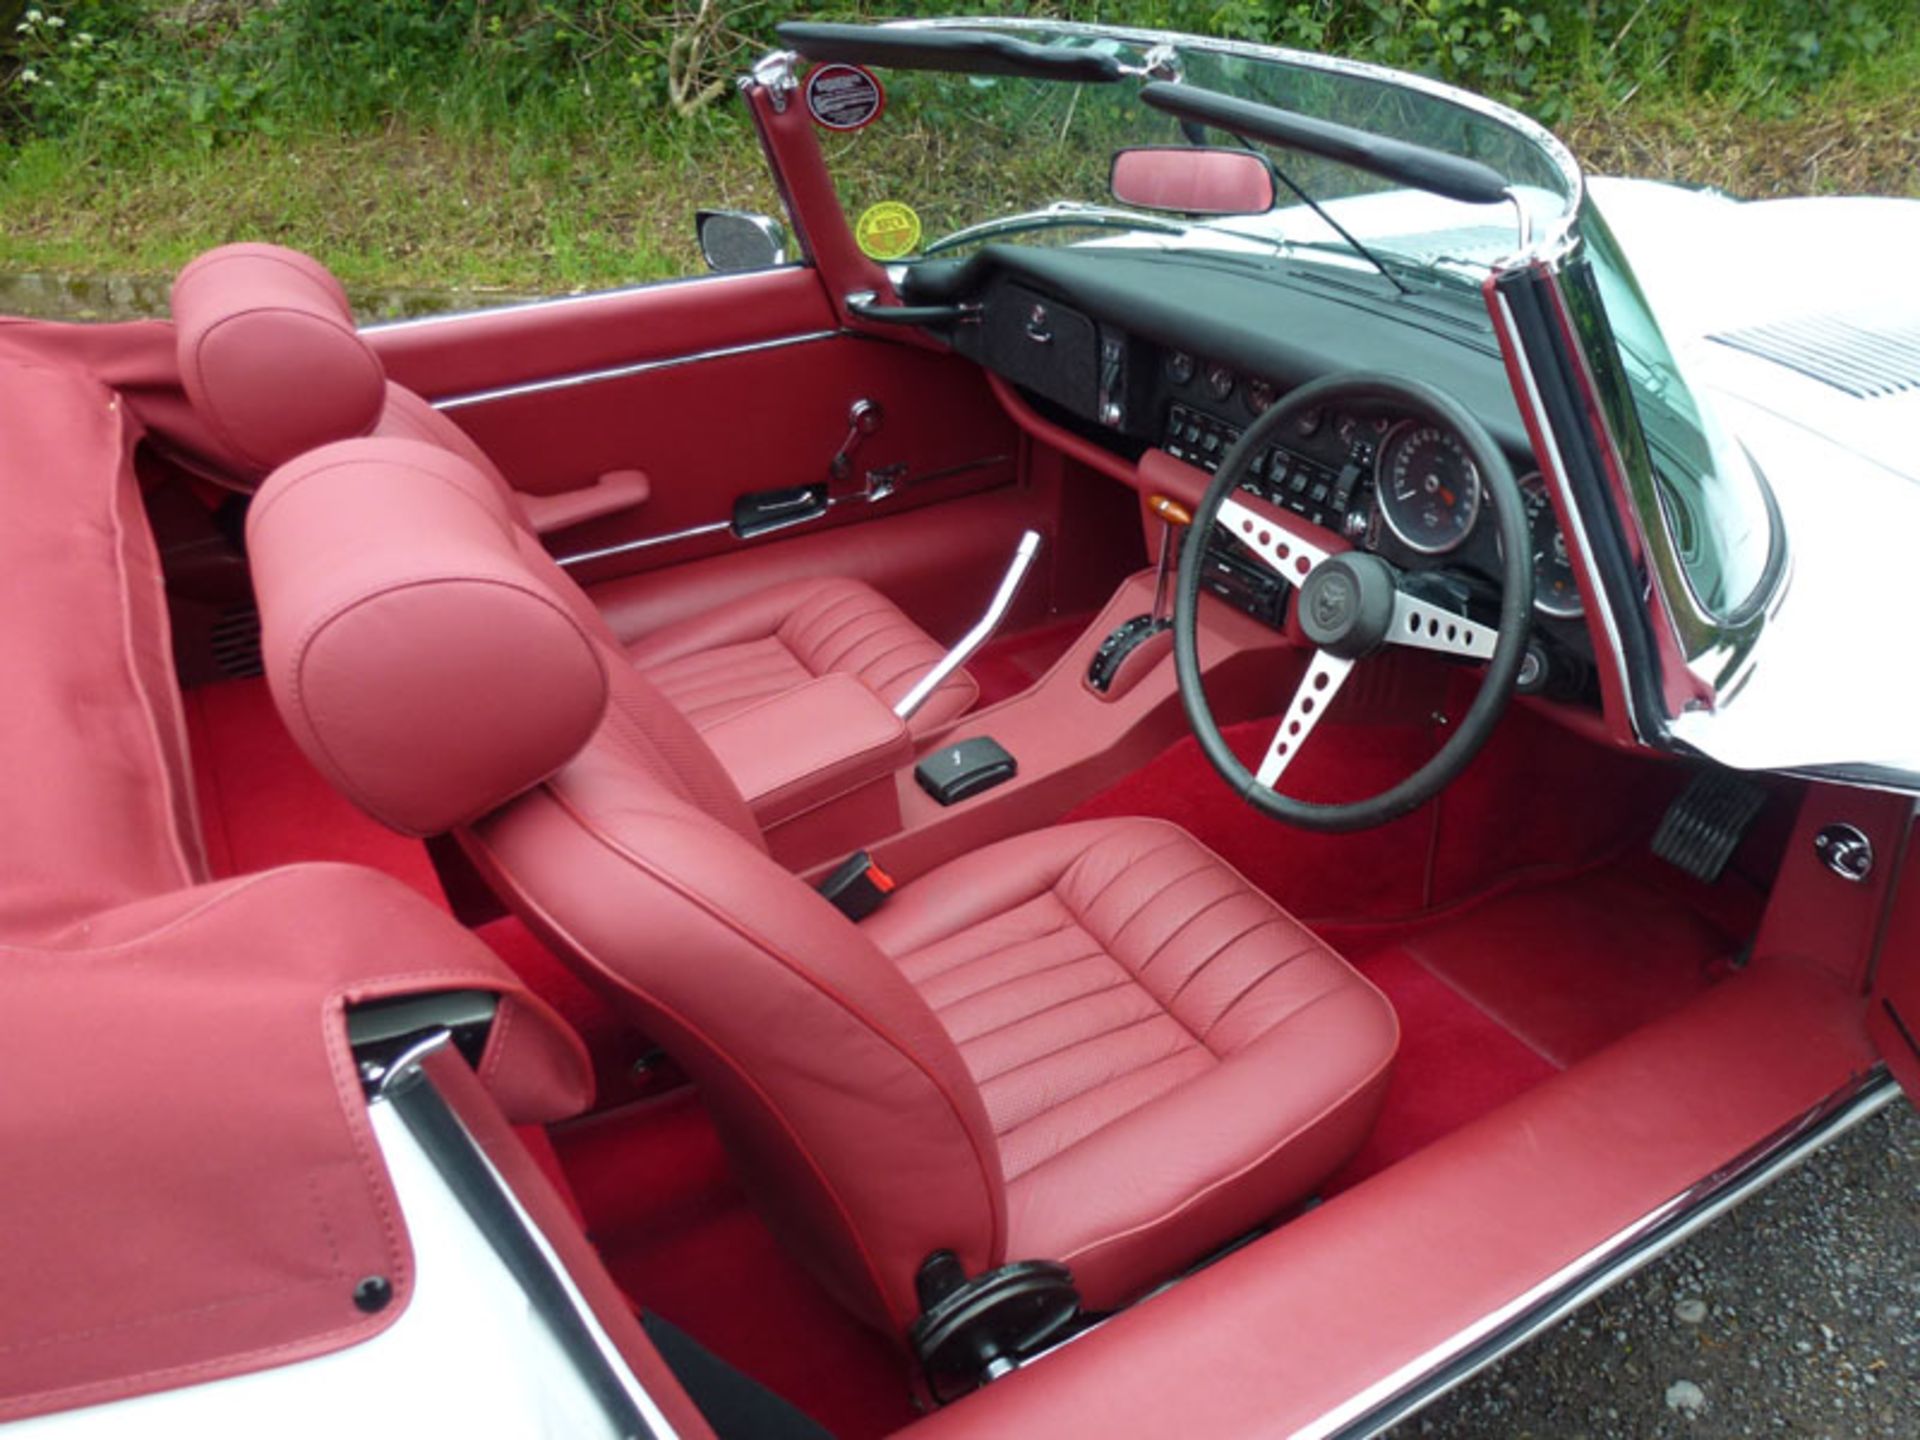 1974 Jaguar E-Type V12 Roadster - Image 5 of 13